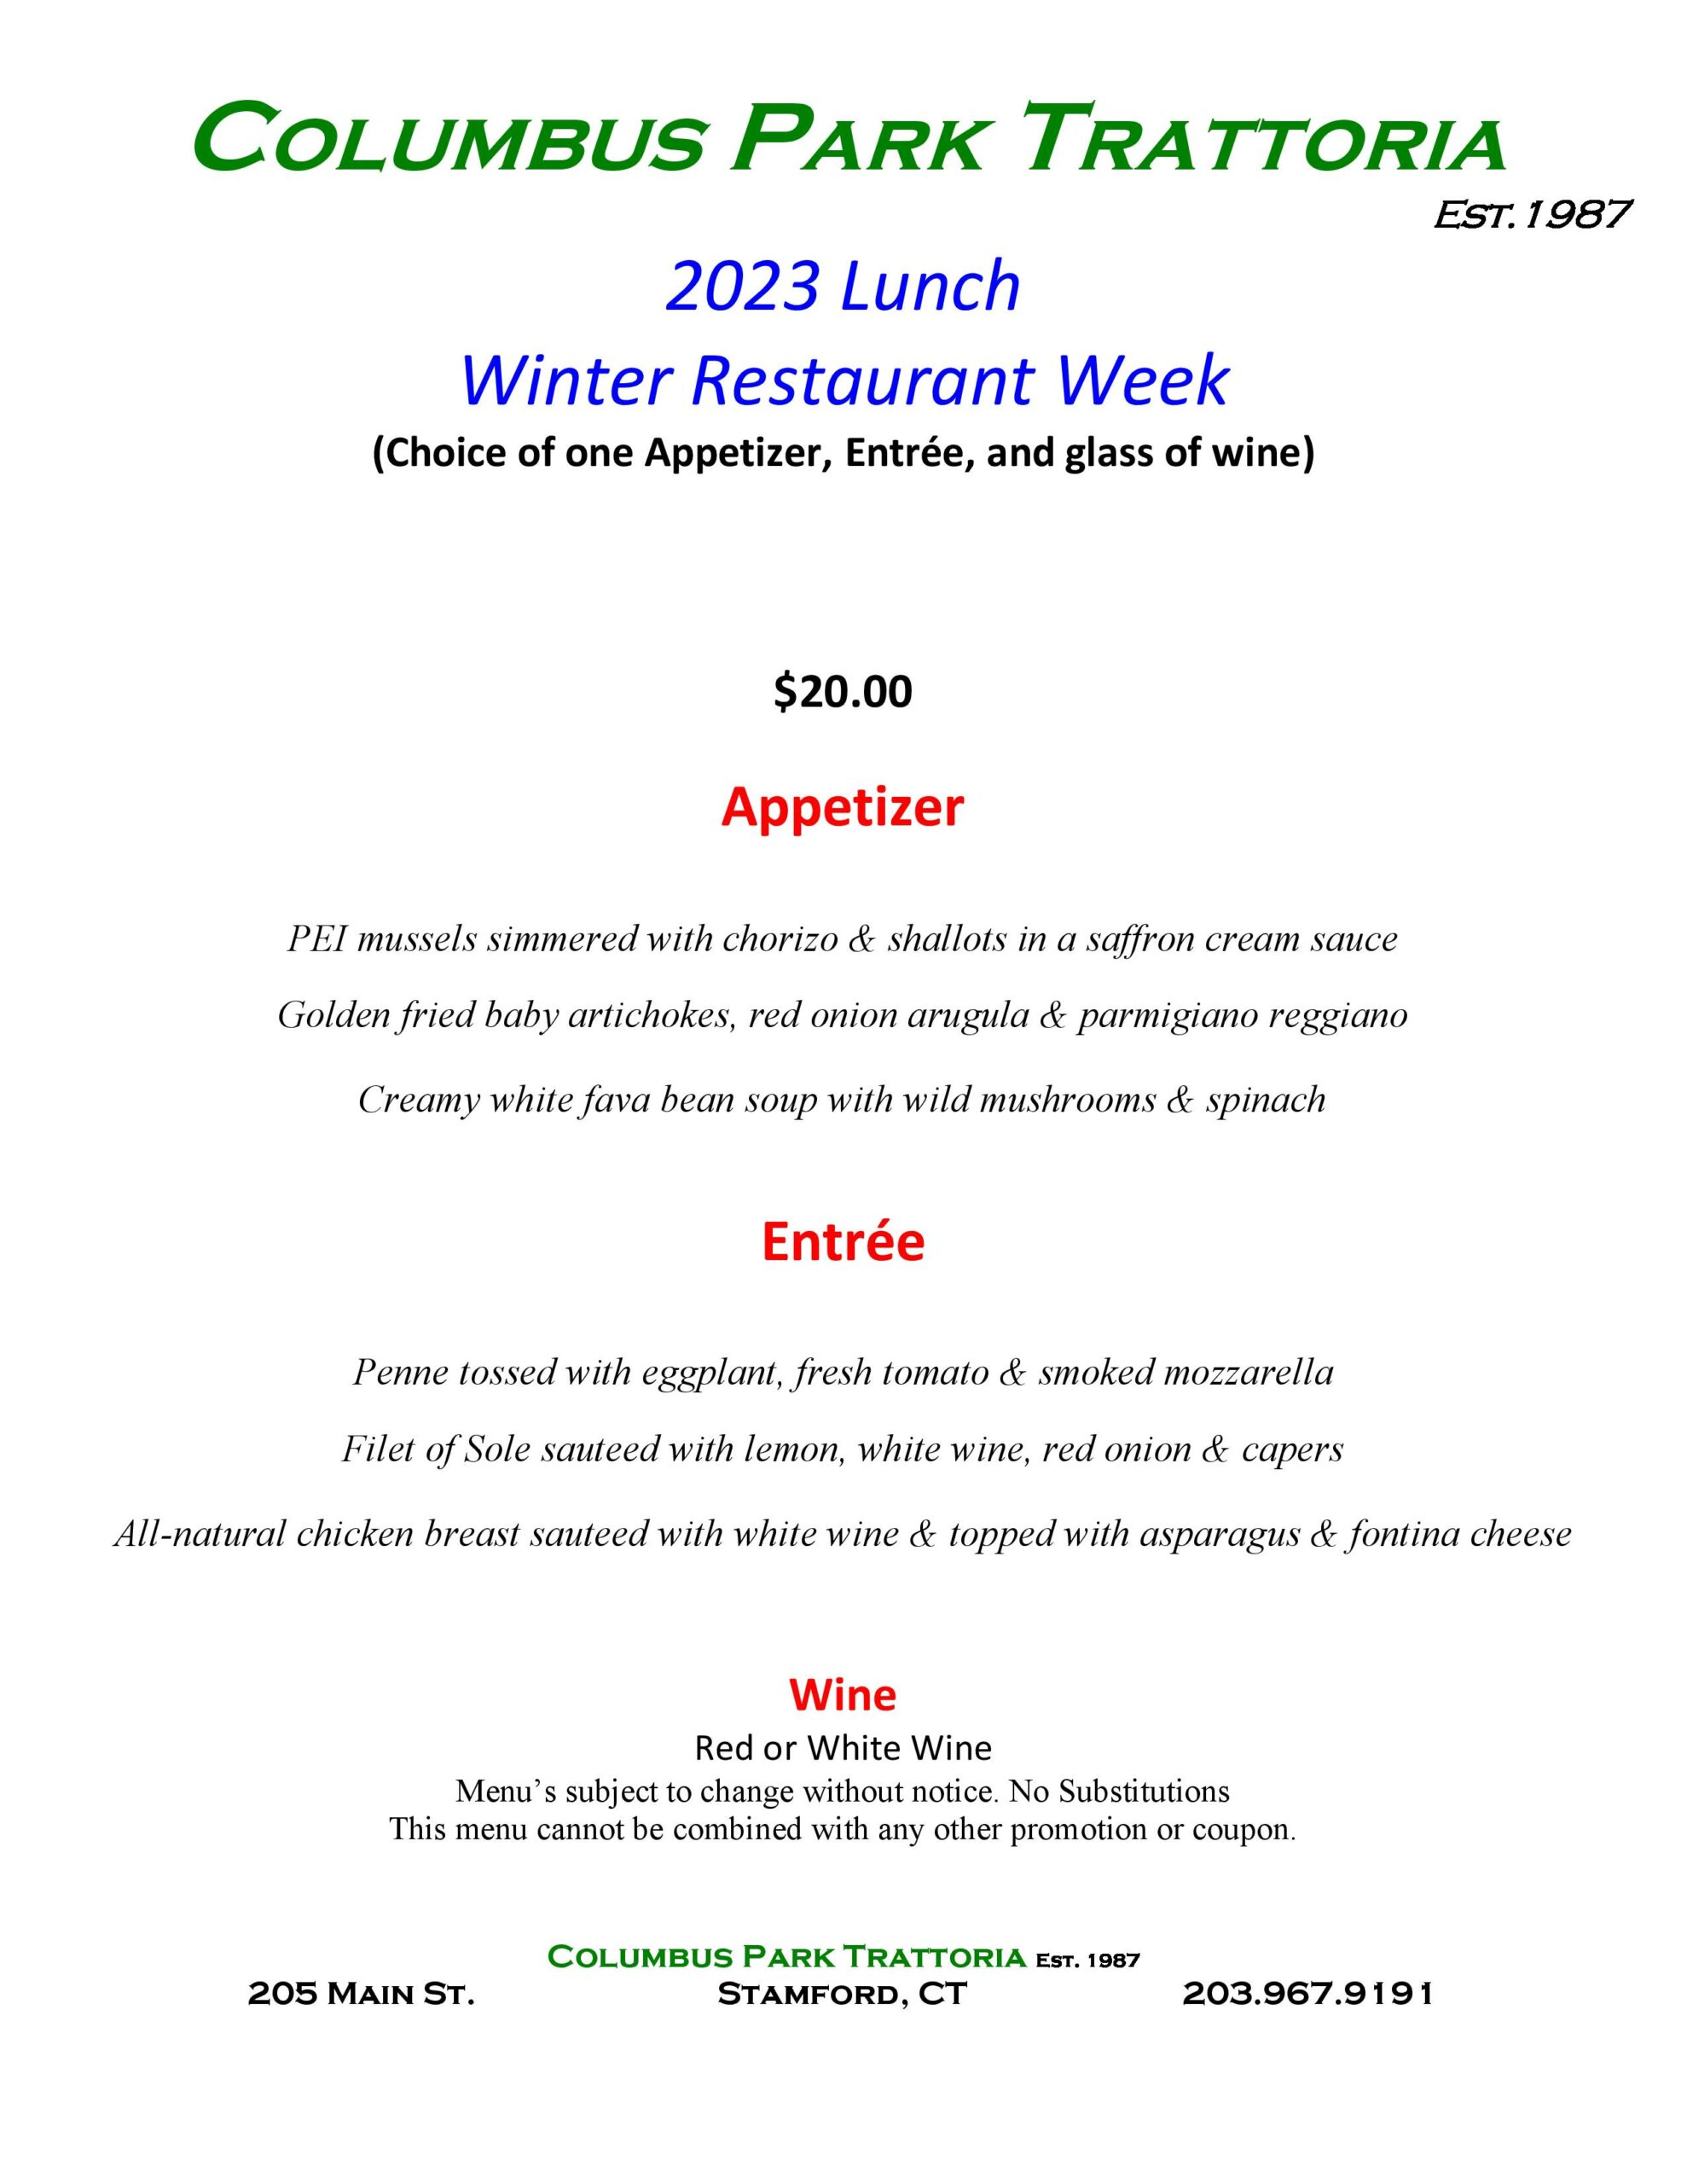 Columbus Park Stamford Restaurant Week Lunch Menu 2023